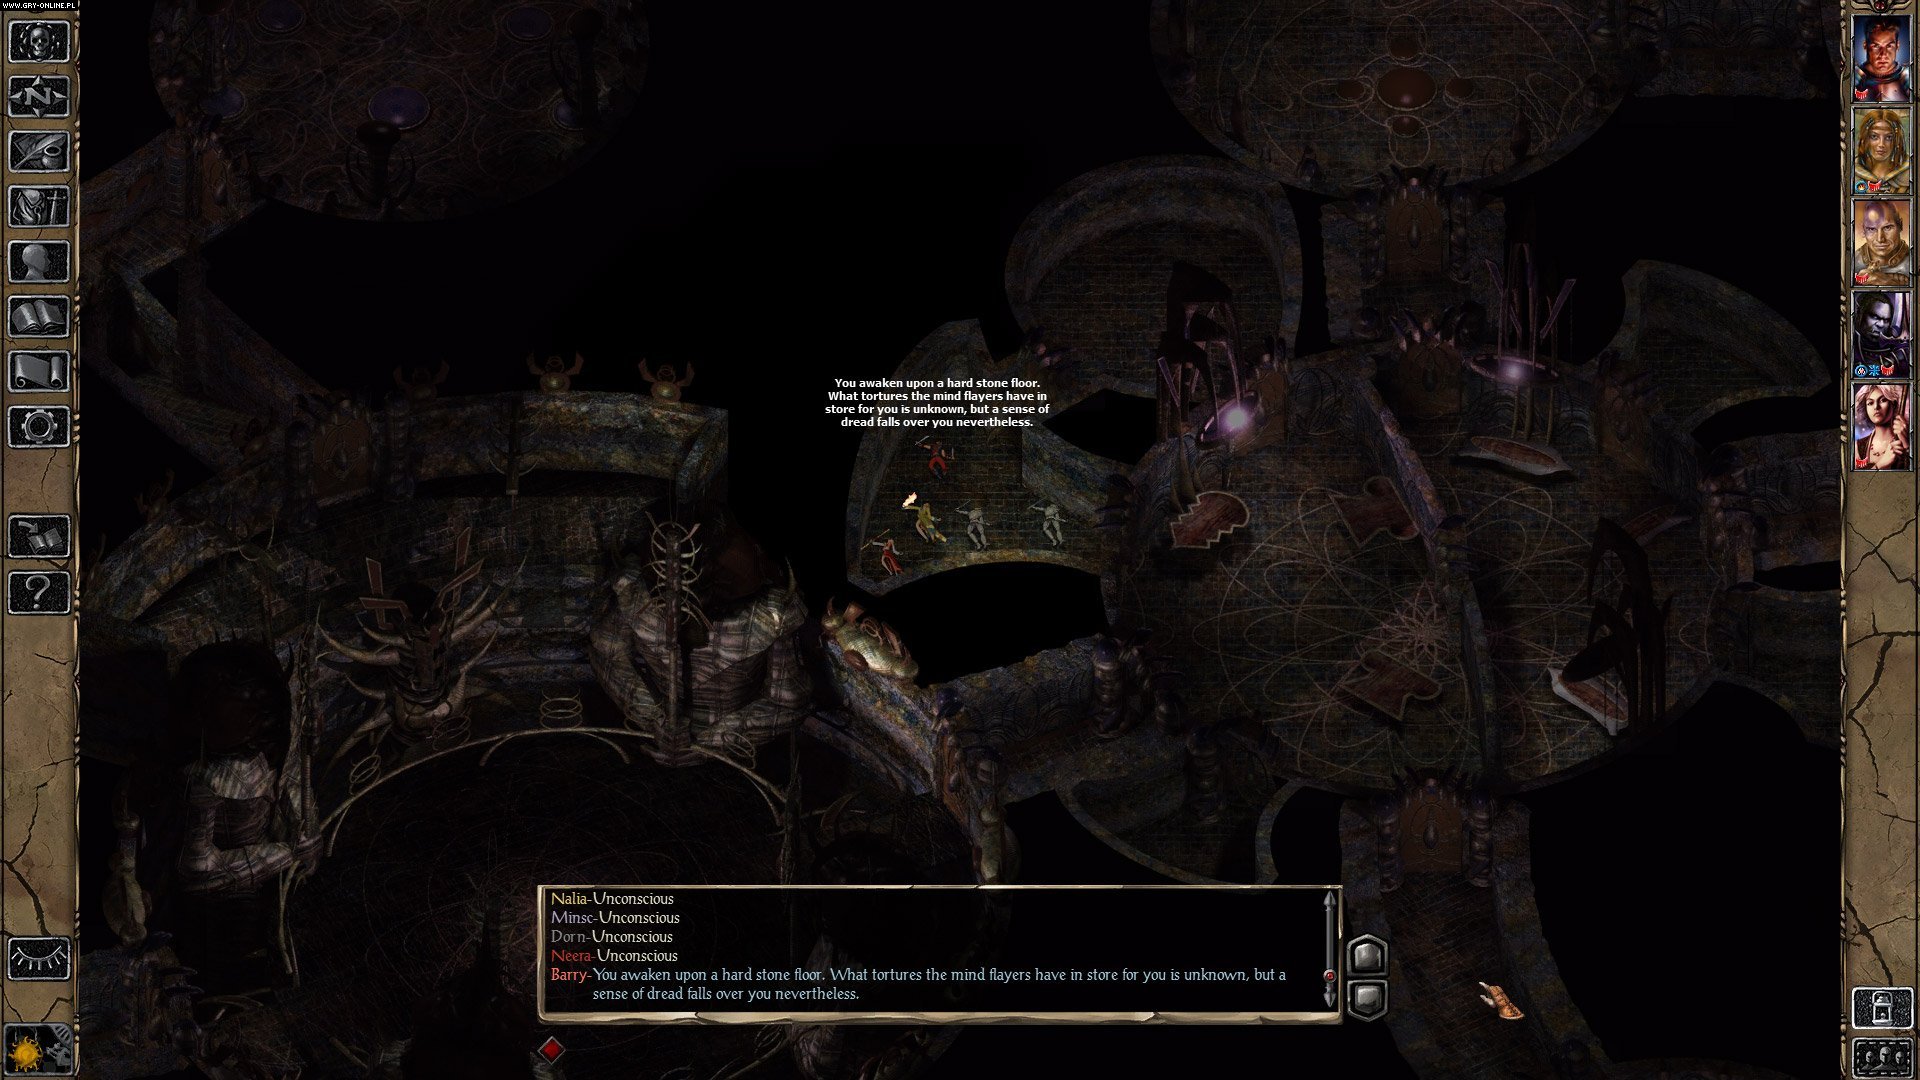 Baldurs Gate II: Enhanced Edition on Steam